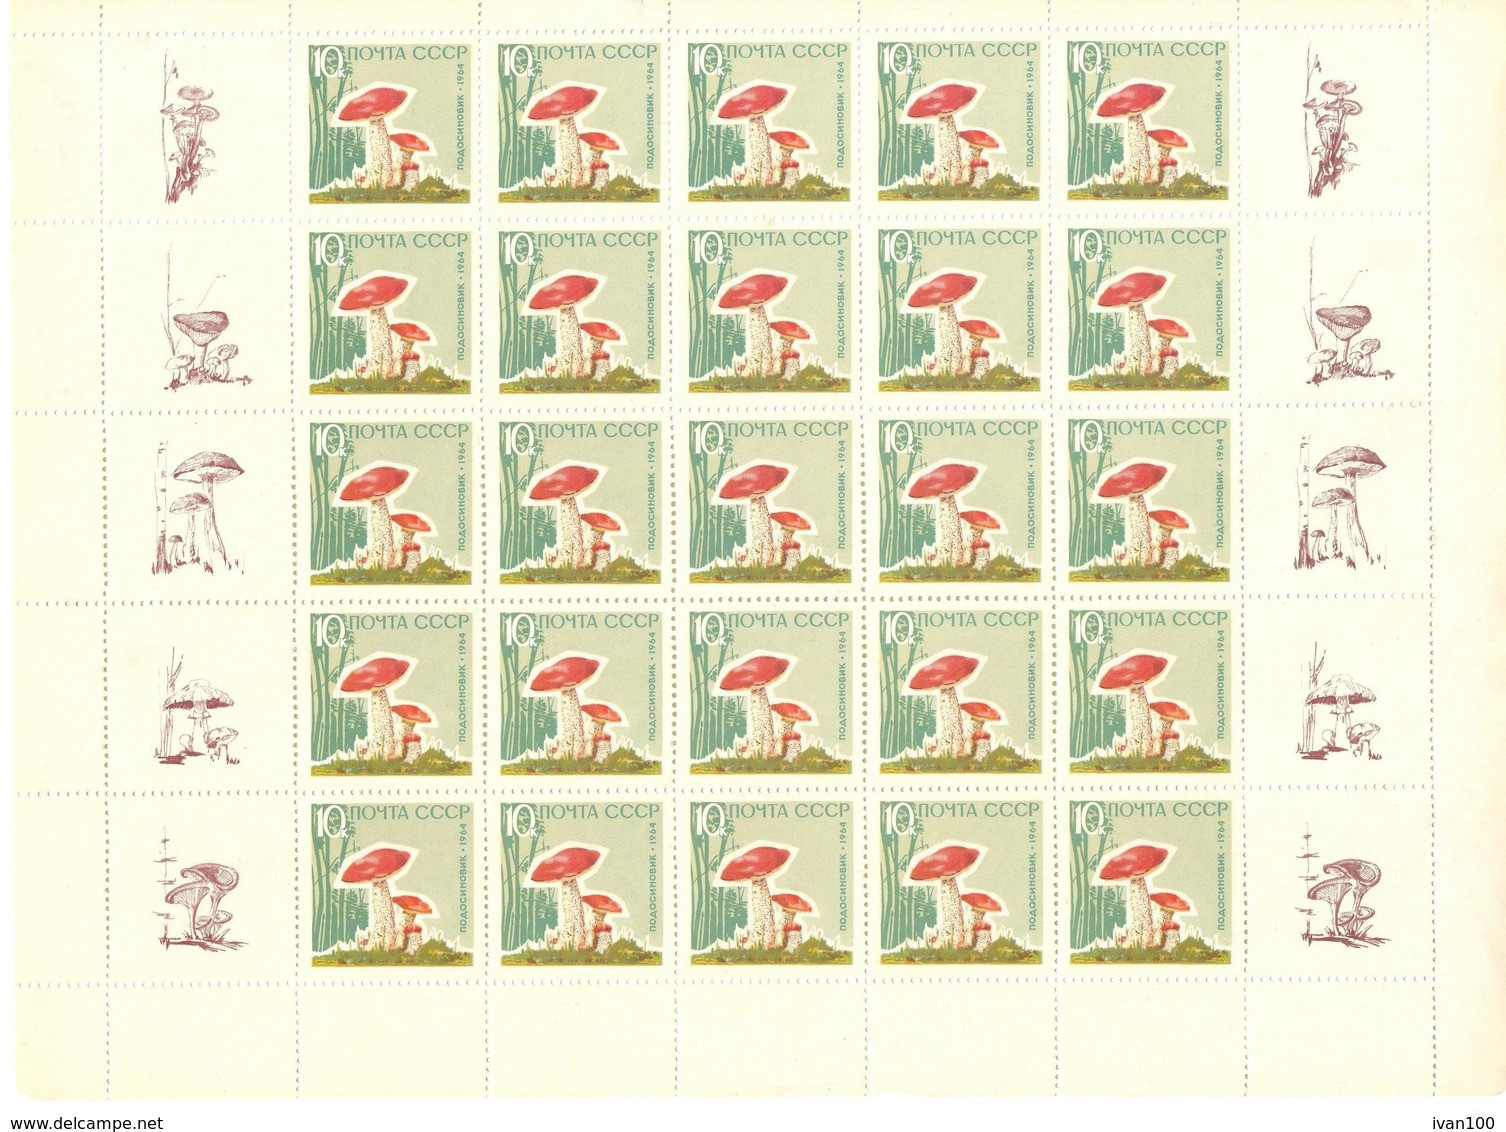 1964. USSR/Russia, Mushrooms, Mich.2983y/2987y, 5 sheetlets, mint/**